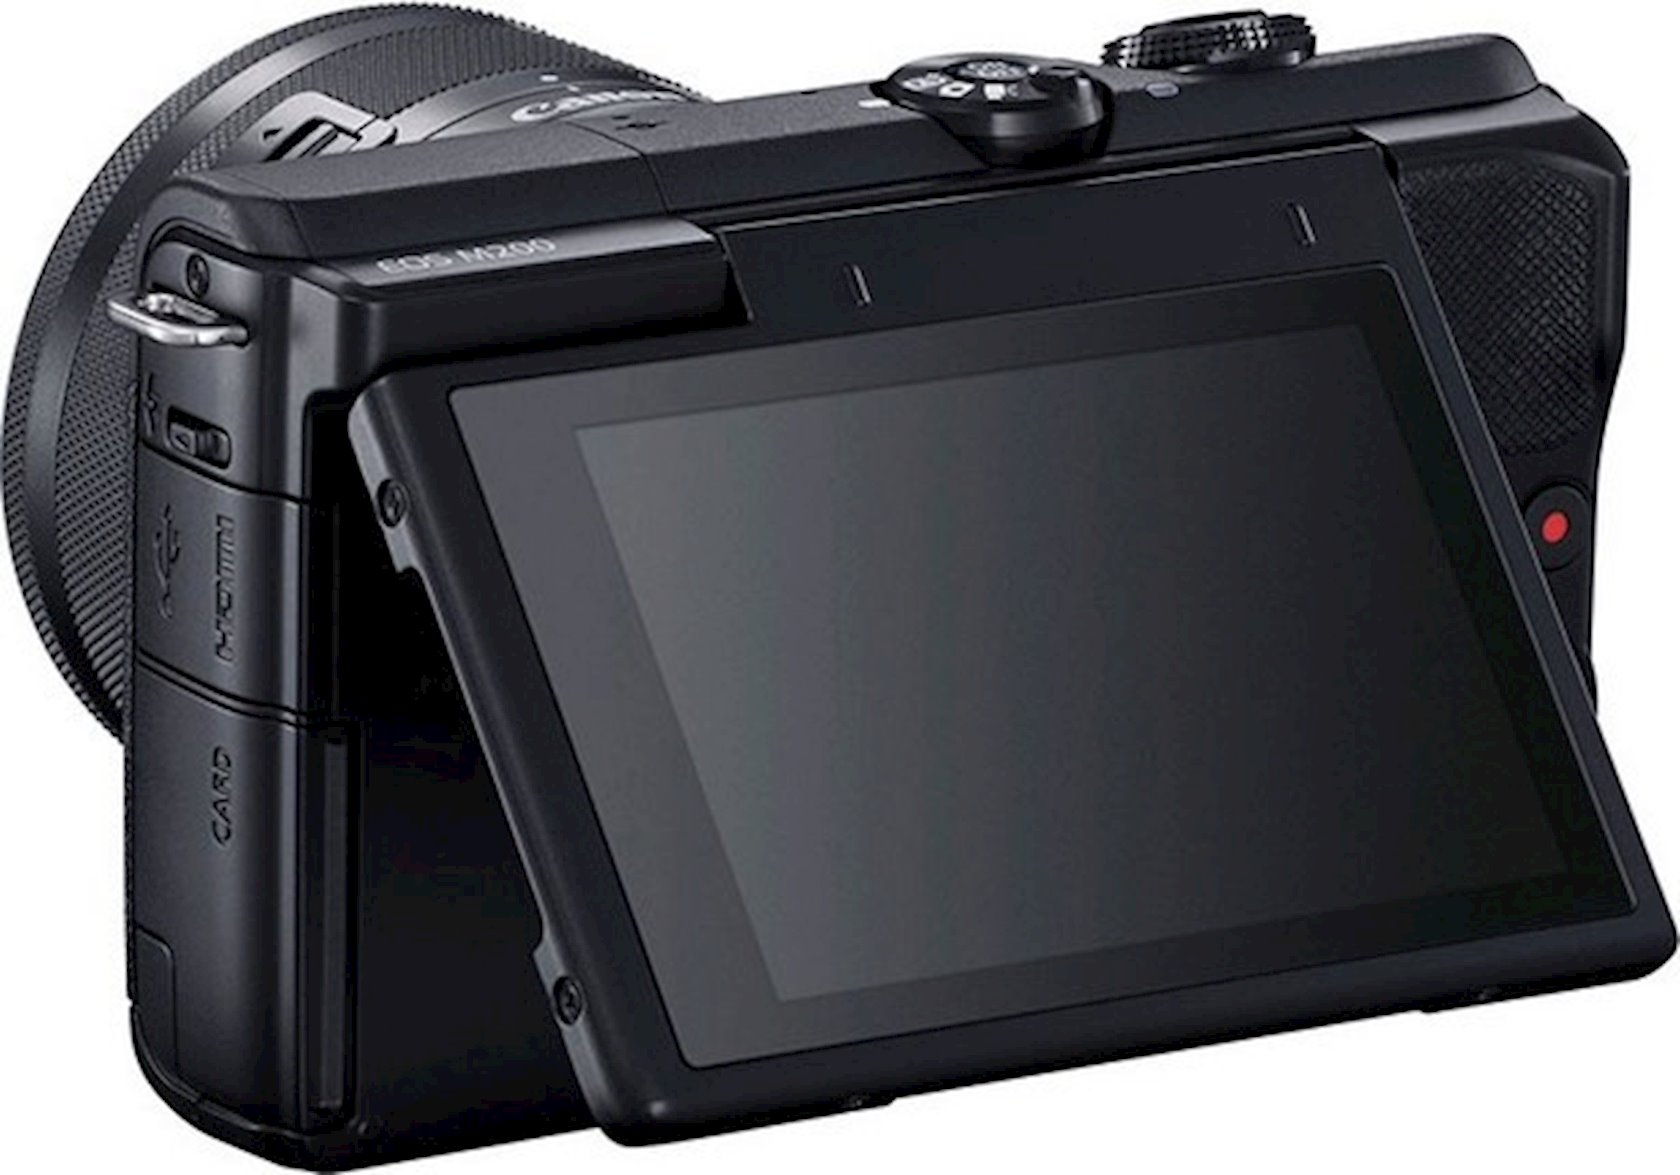 Fotoaparat Canon EOS M200 EF-M15-45 IS STM Kit